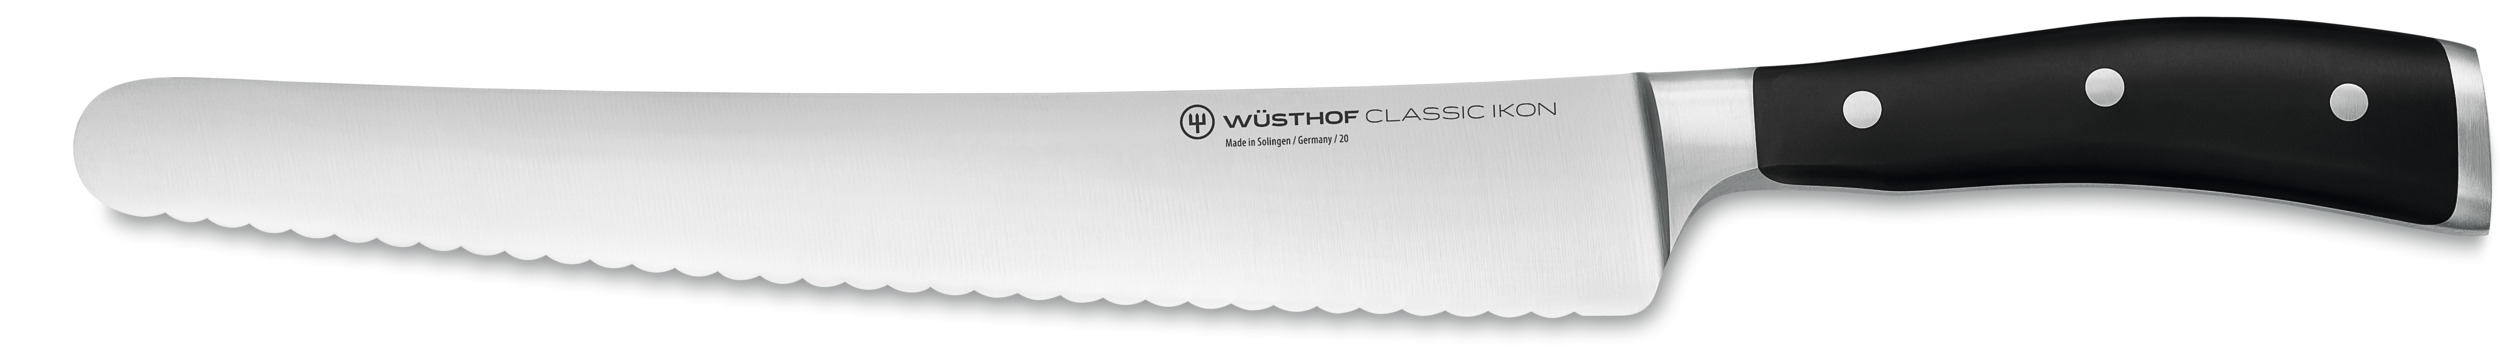 Wüsthof Classic Ikon Super Slicer 26 cm